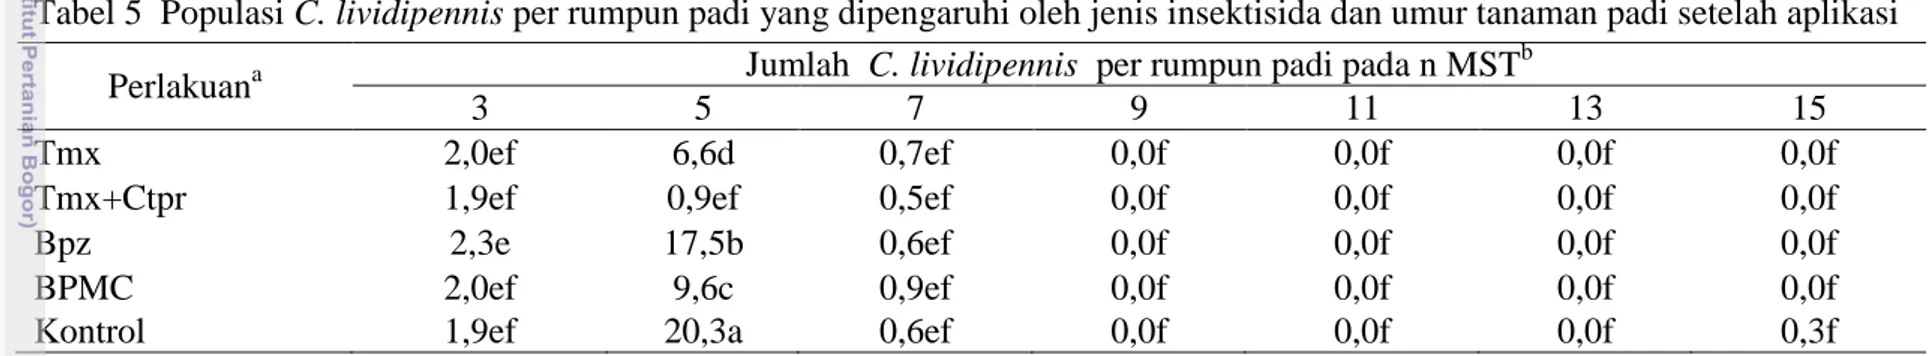 Tabel 5  Populasi C. lividipennis per rumpun padi yang dipengaruhi oleh jenis insektisida dan umur tanaman padi setelah aplikasi 